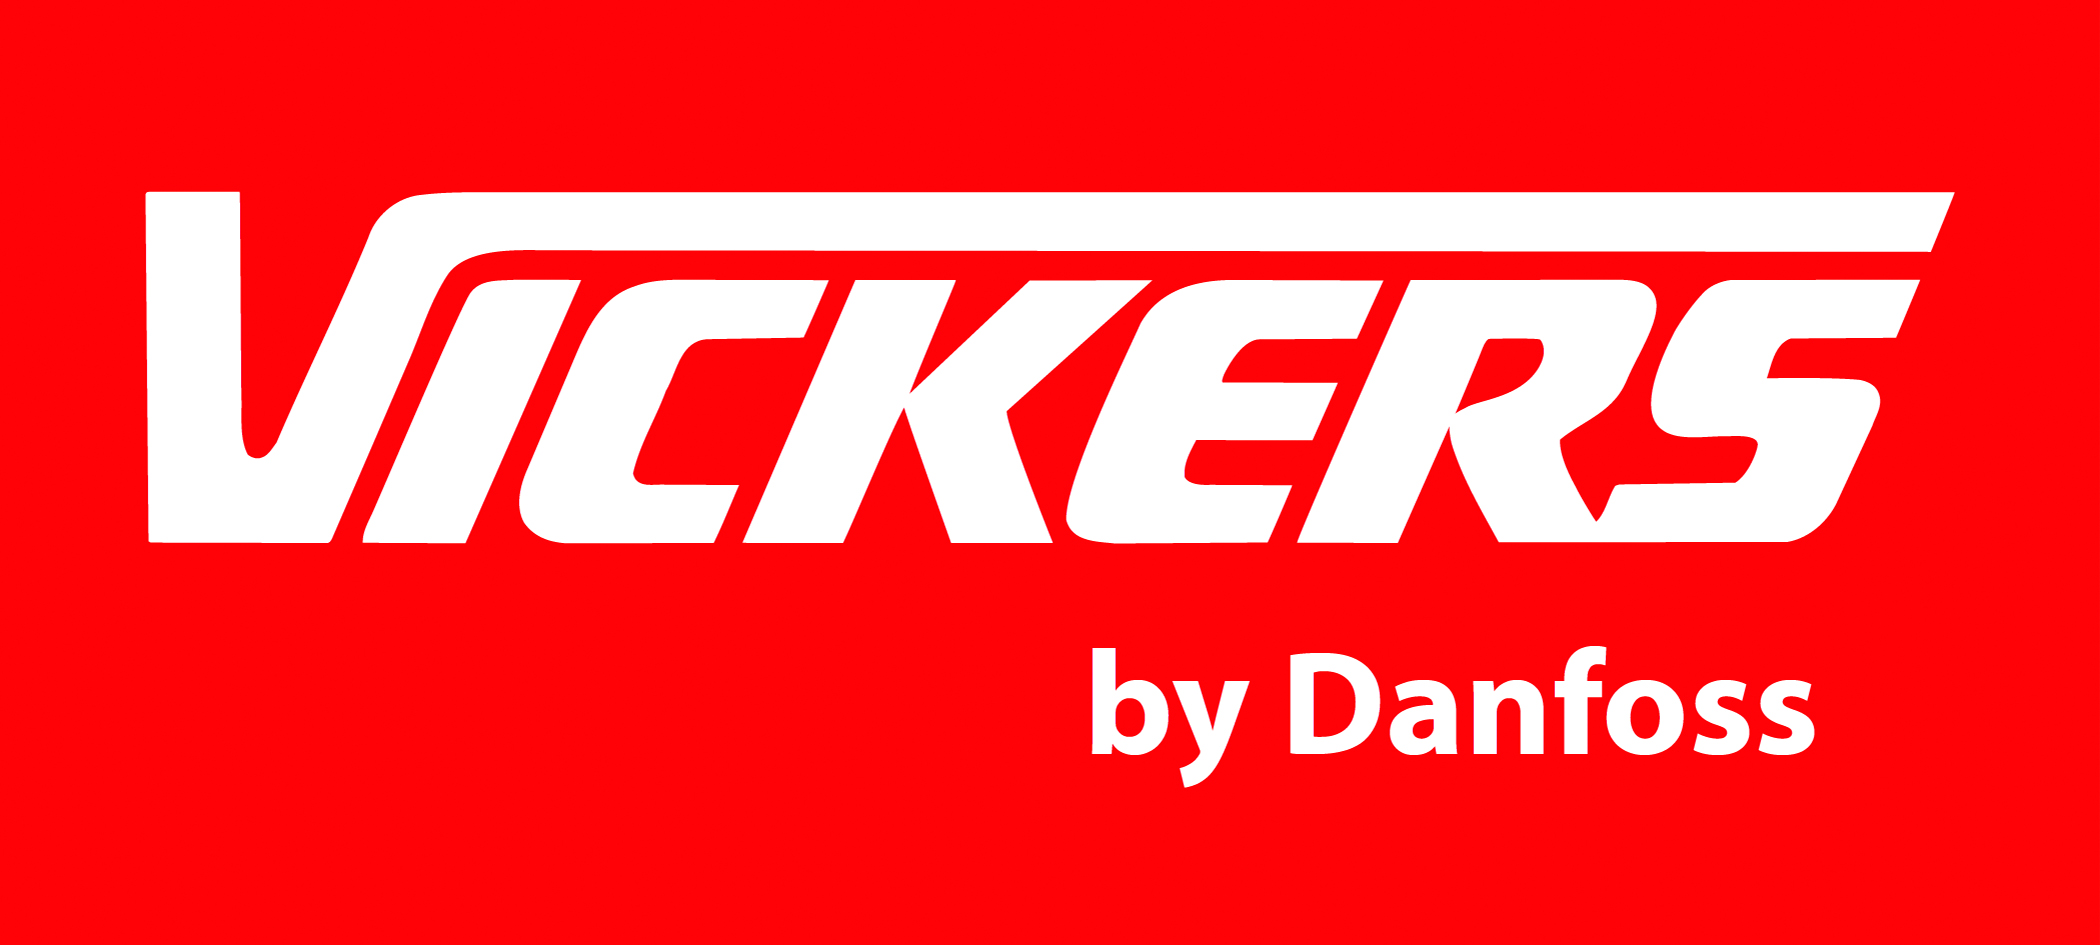 Vickers_by_Danfoss-Logo-White_RedCMYK